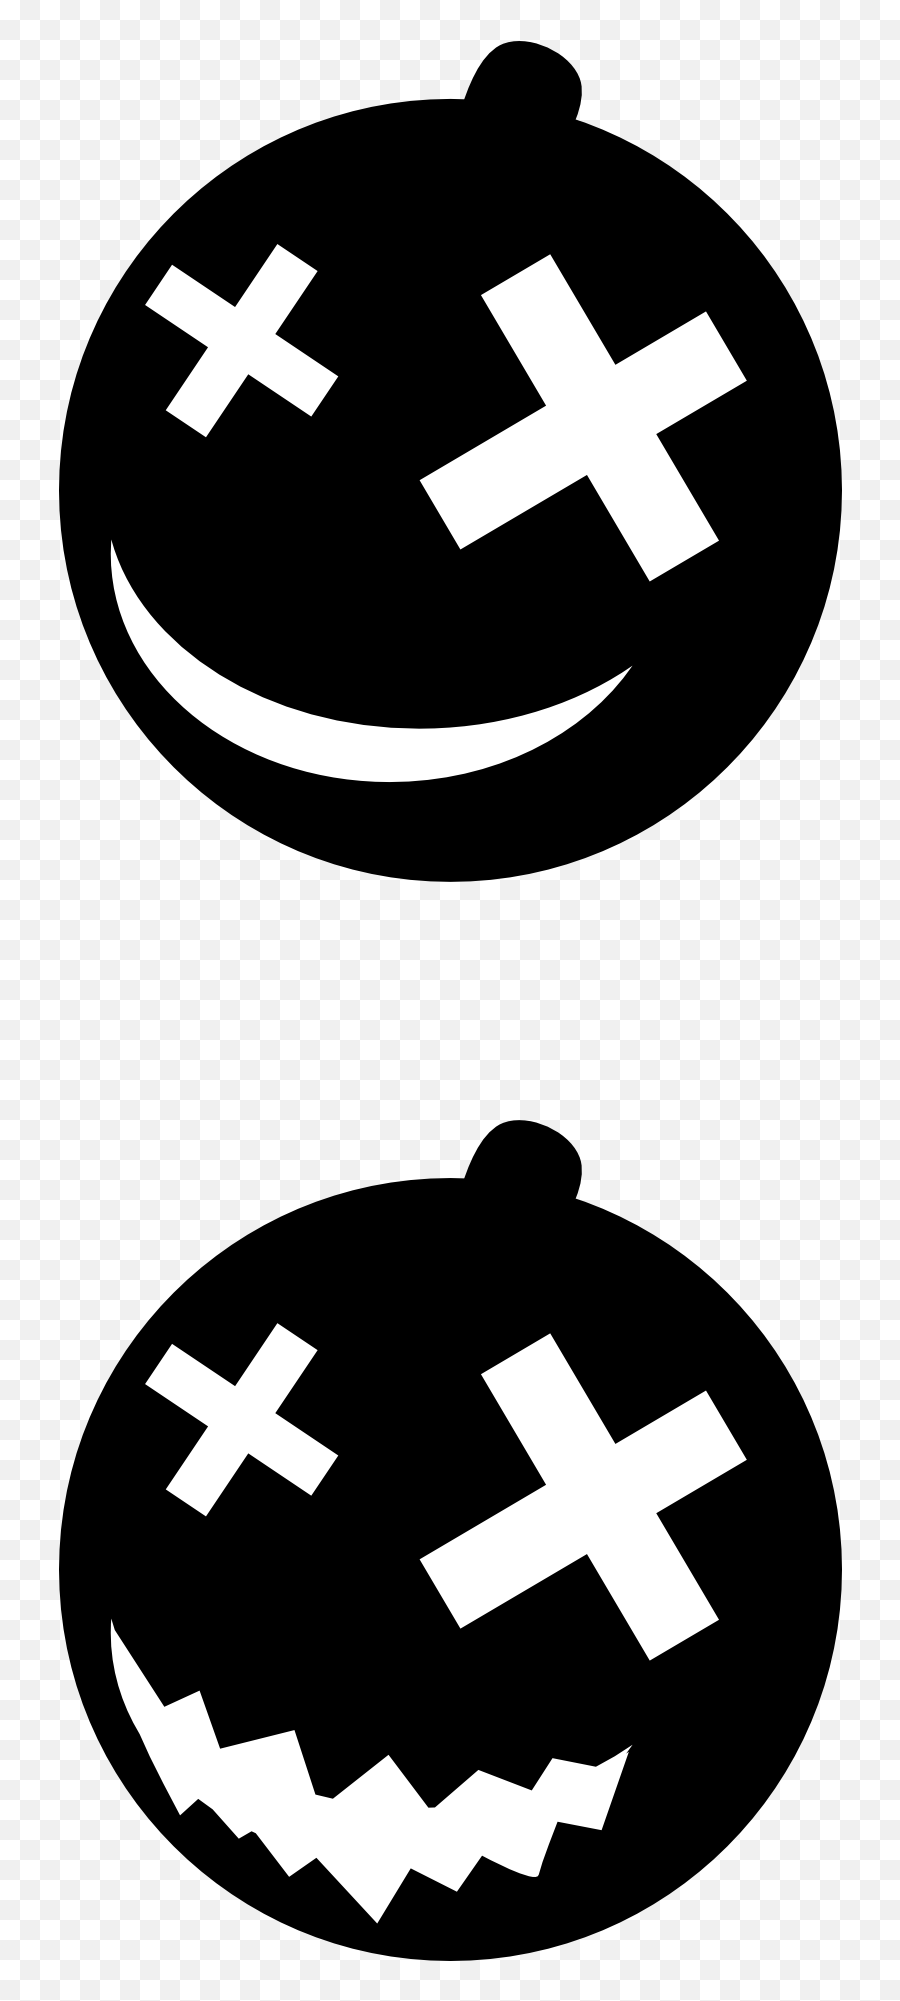 This Free Clip Arts Design Of Halloween - Silhouette Dot Emoji,Pumpkin Clipart Black And White